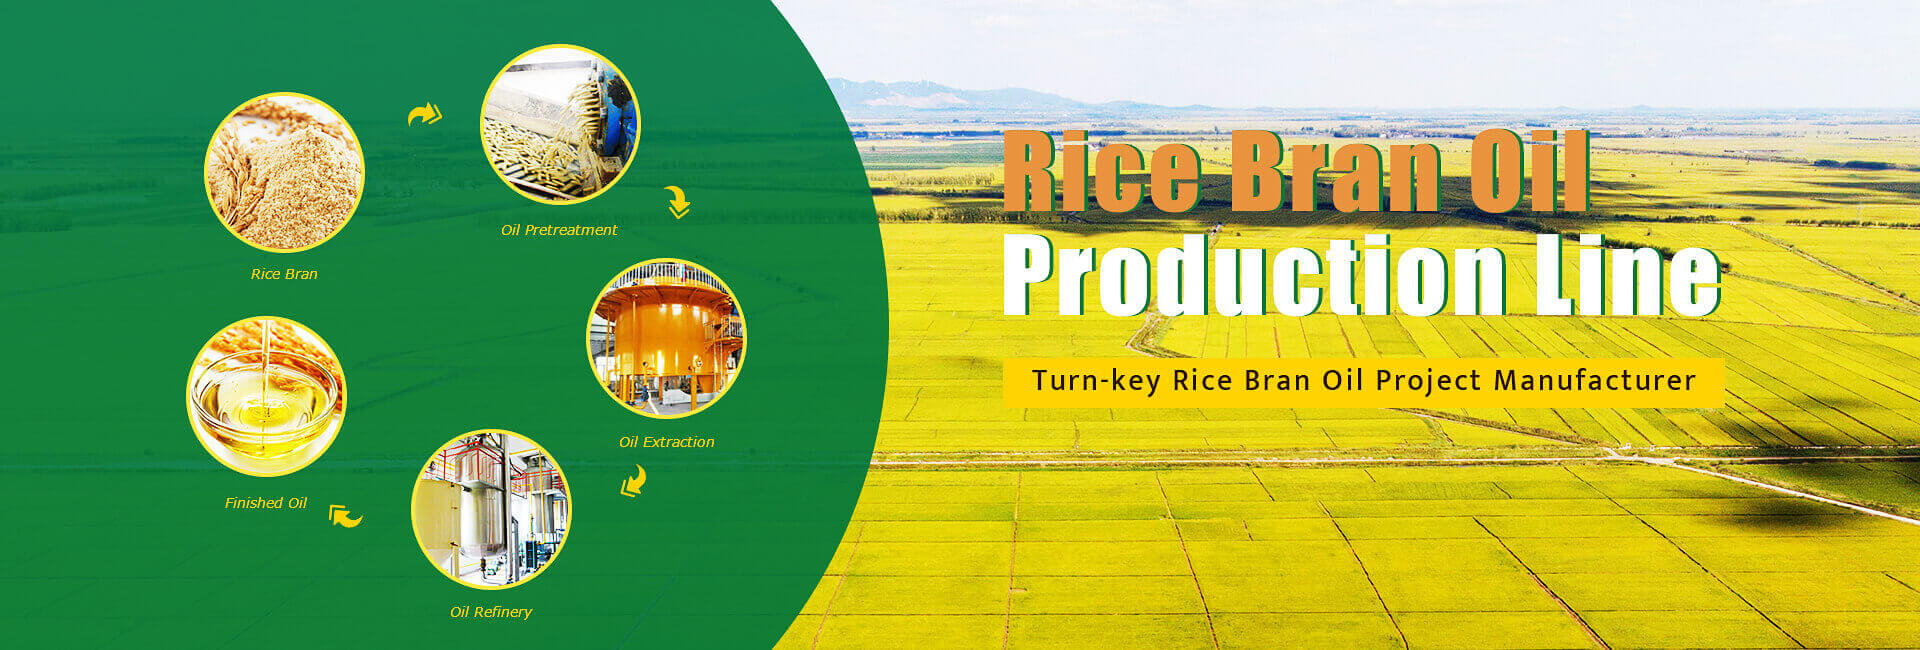 Rice Bran Oil Production Line